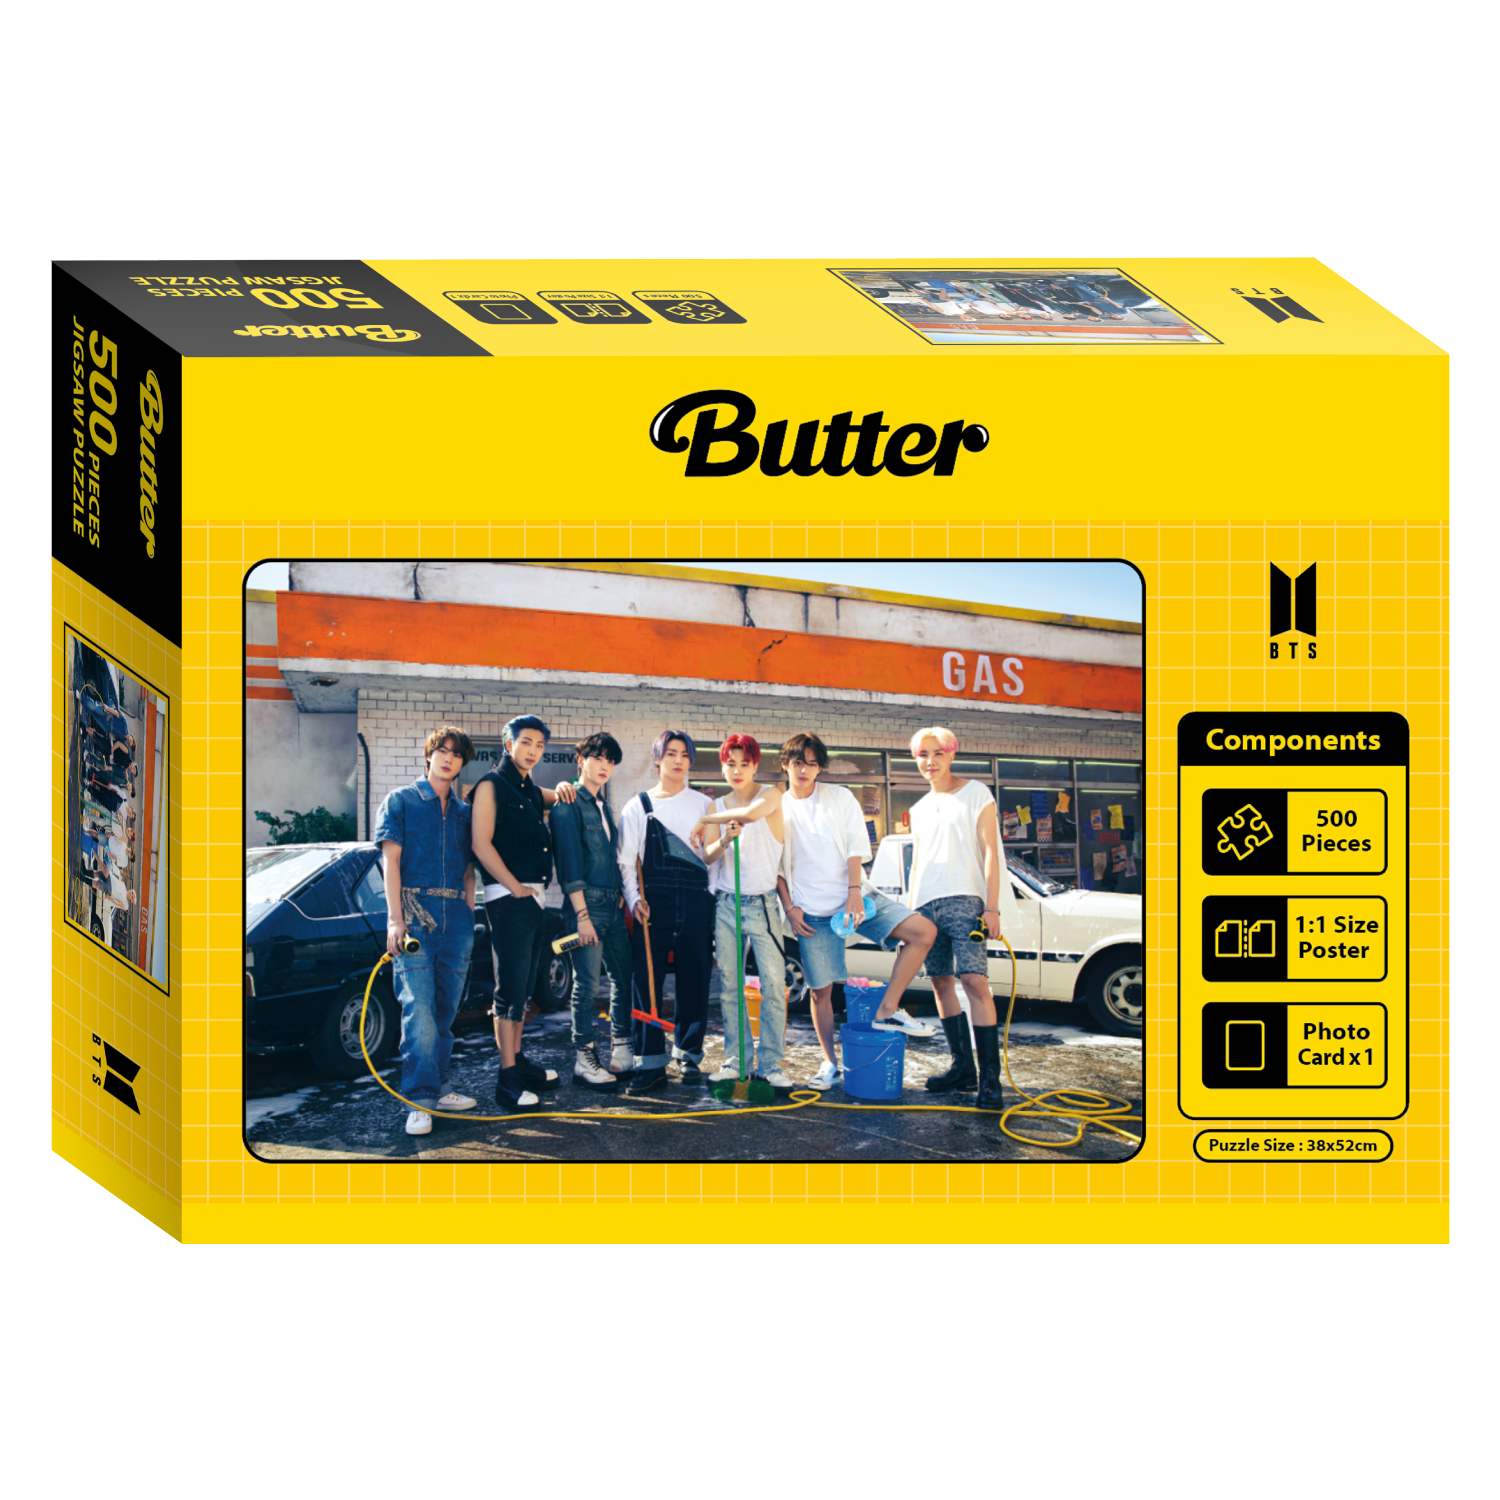 BTS Jigsaw Puzzle 500 Pieces, Butter 2